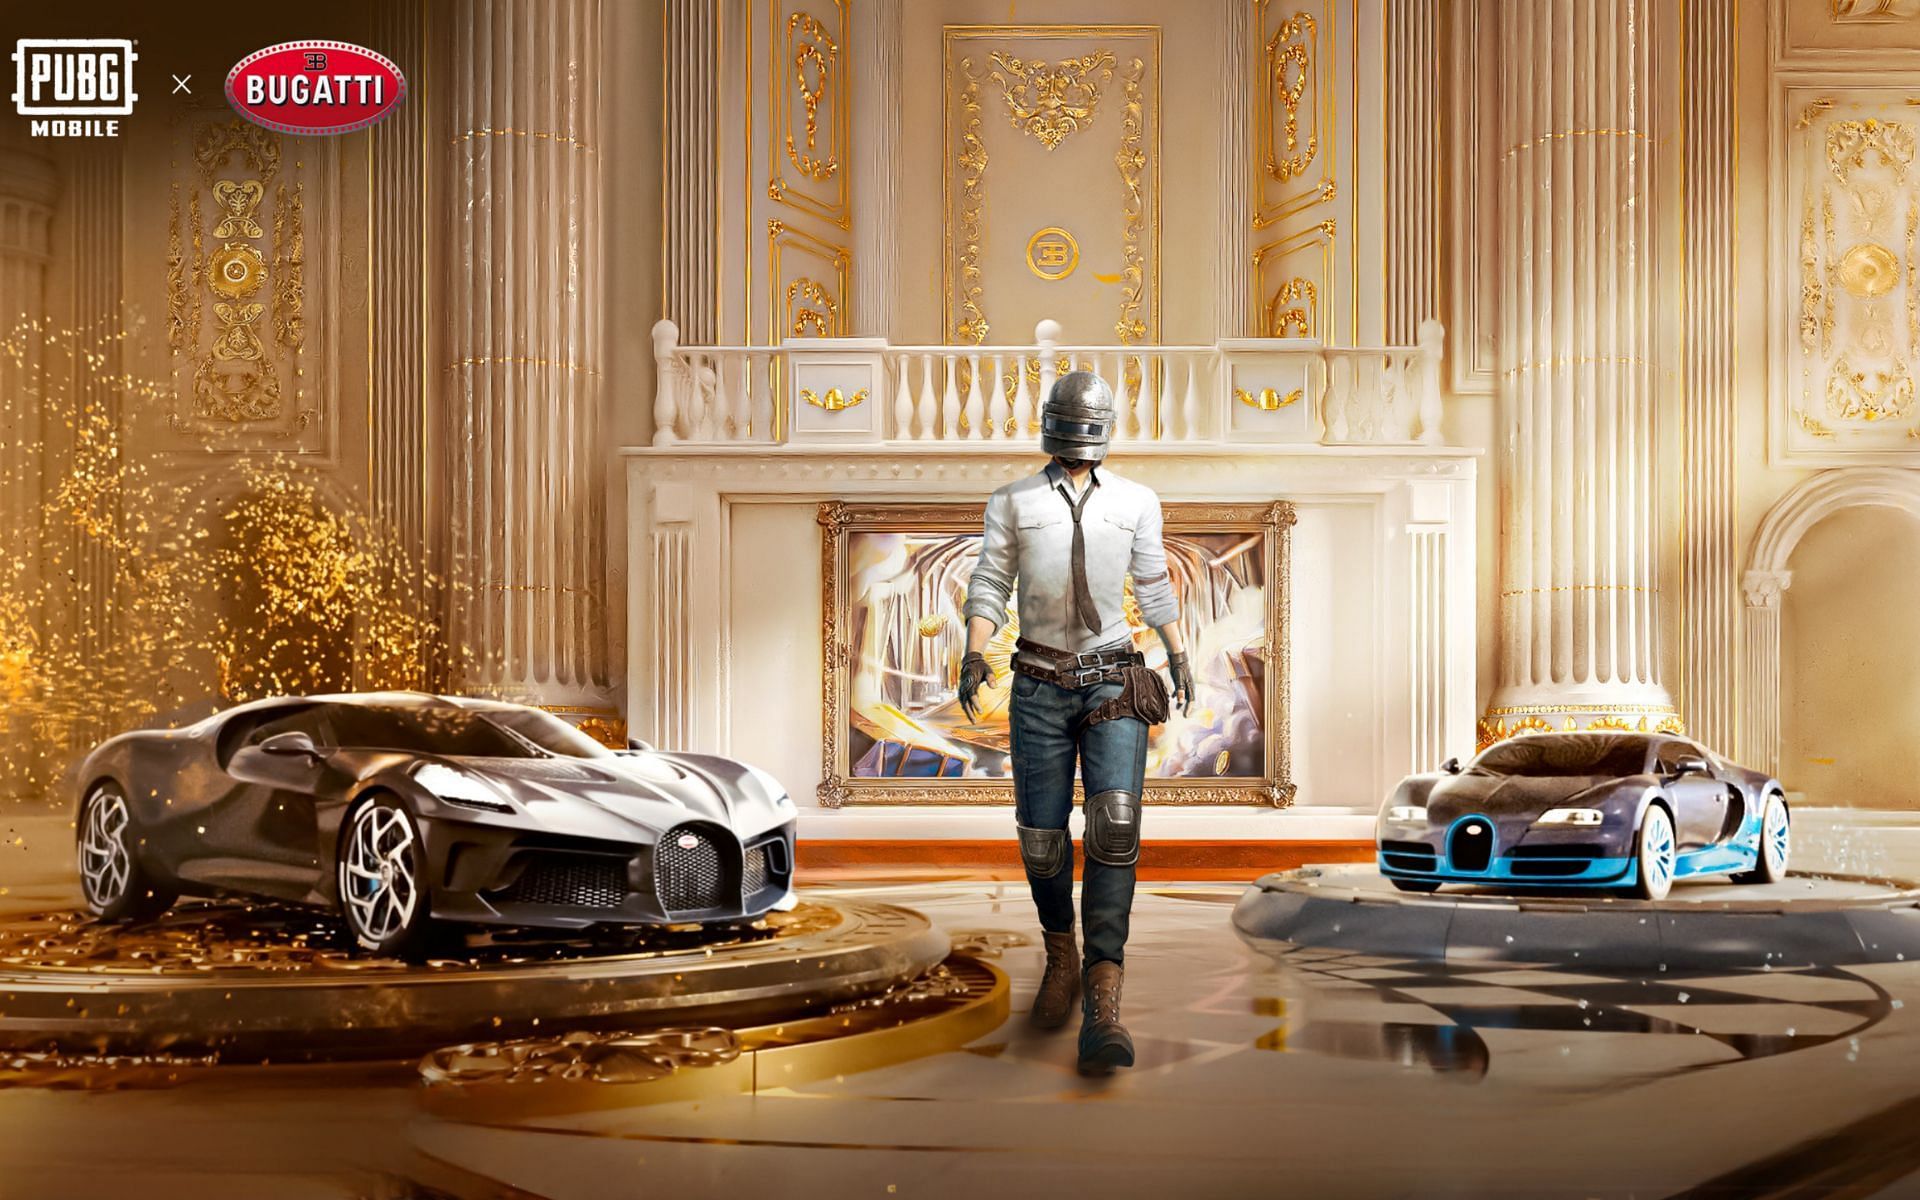 PUBG Mobile x Bugatti Collaboration is live in the game now (Image via Tencent)